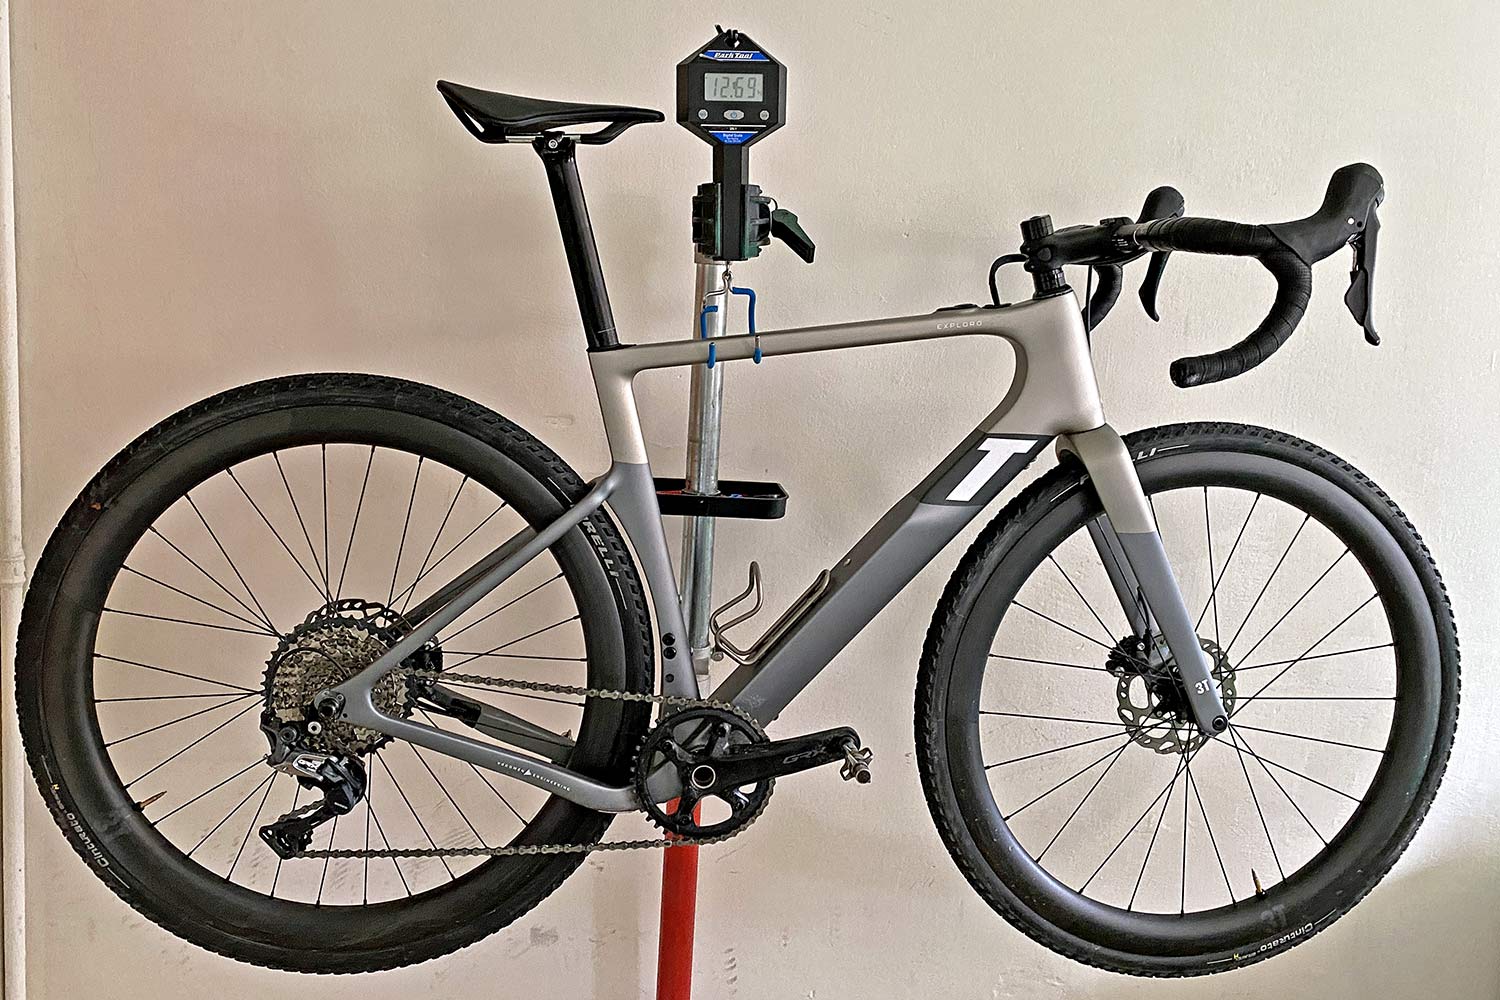 3T Exploro RaceMax Boost gravel e-bike ebikemotion X35 review, actual weight 12.375kg